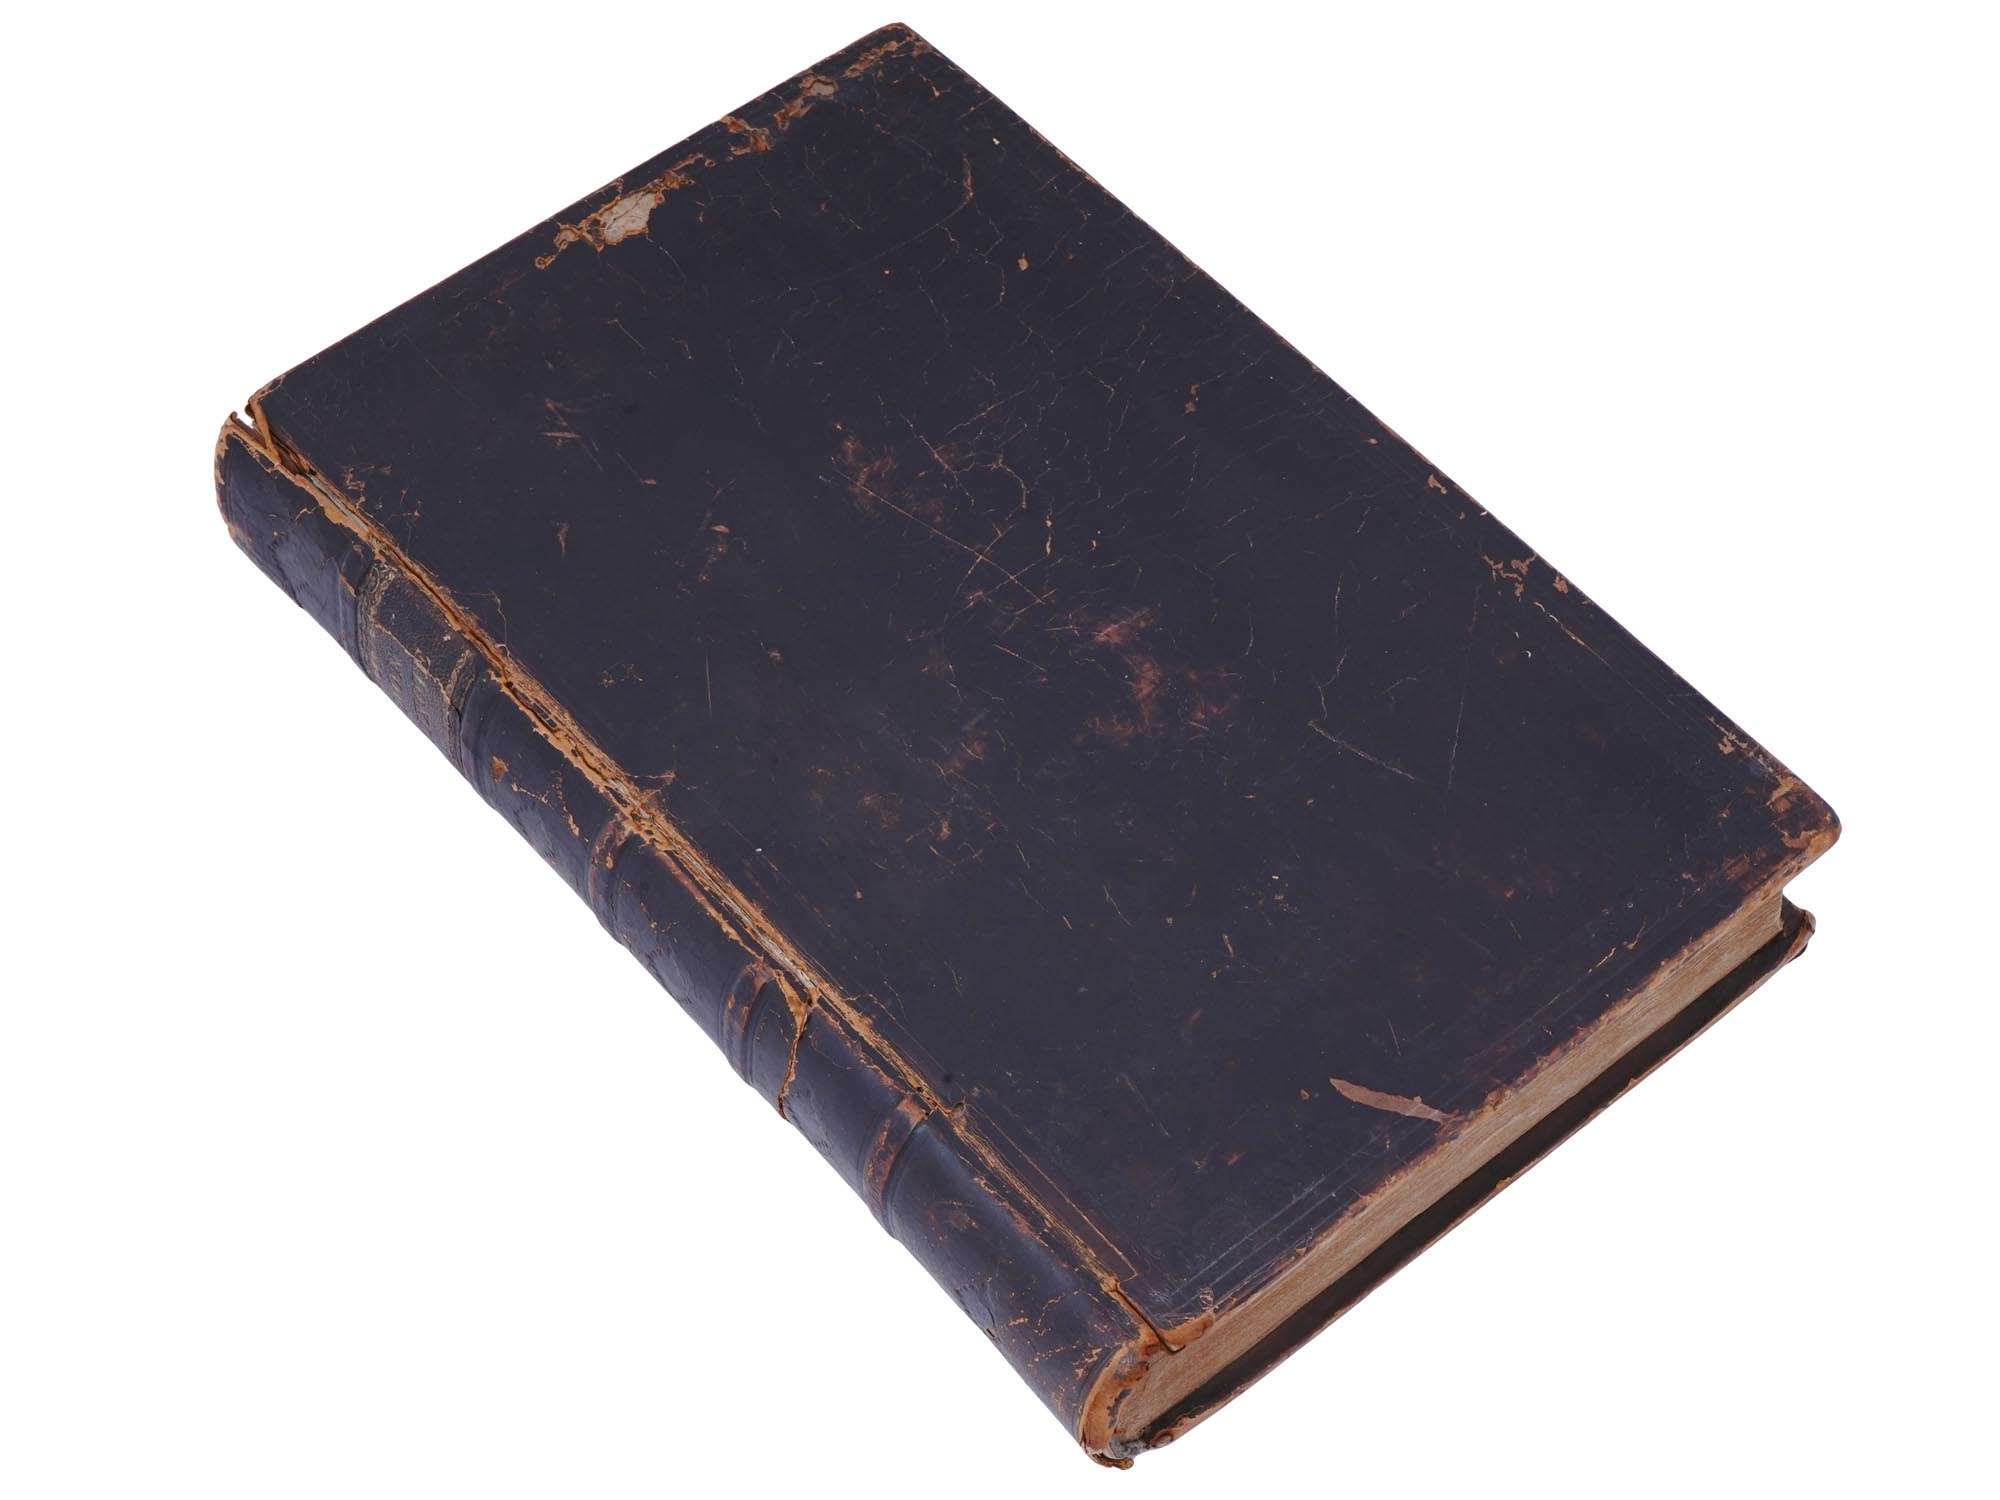 1687 DON QUIXOTE BY CERVANTES ILLUSTRATED EDITION BOOK PIC-0